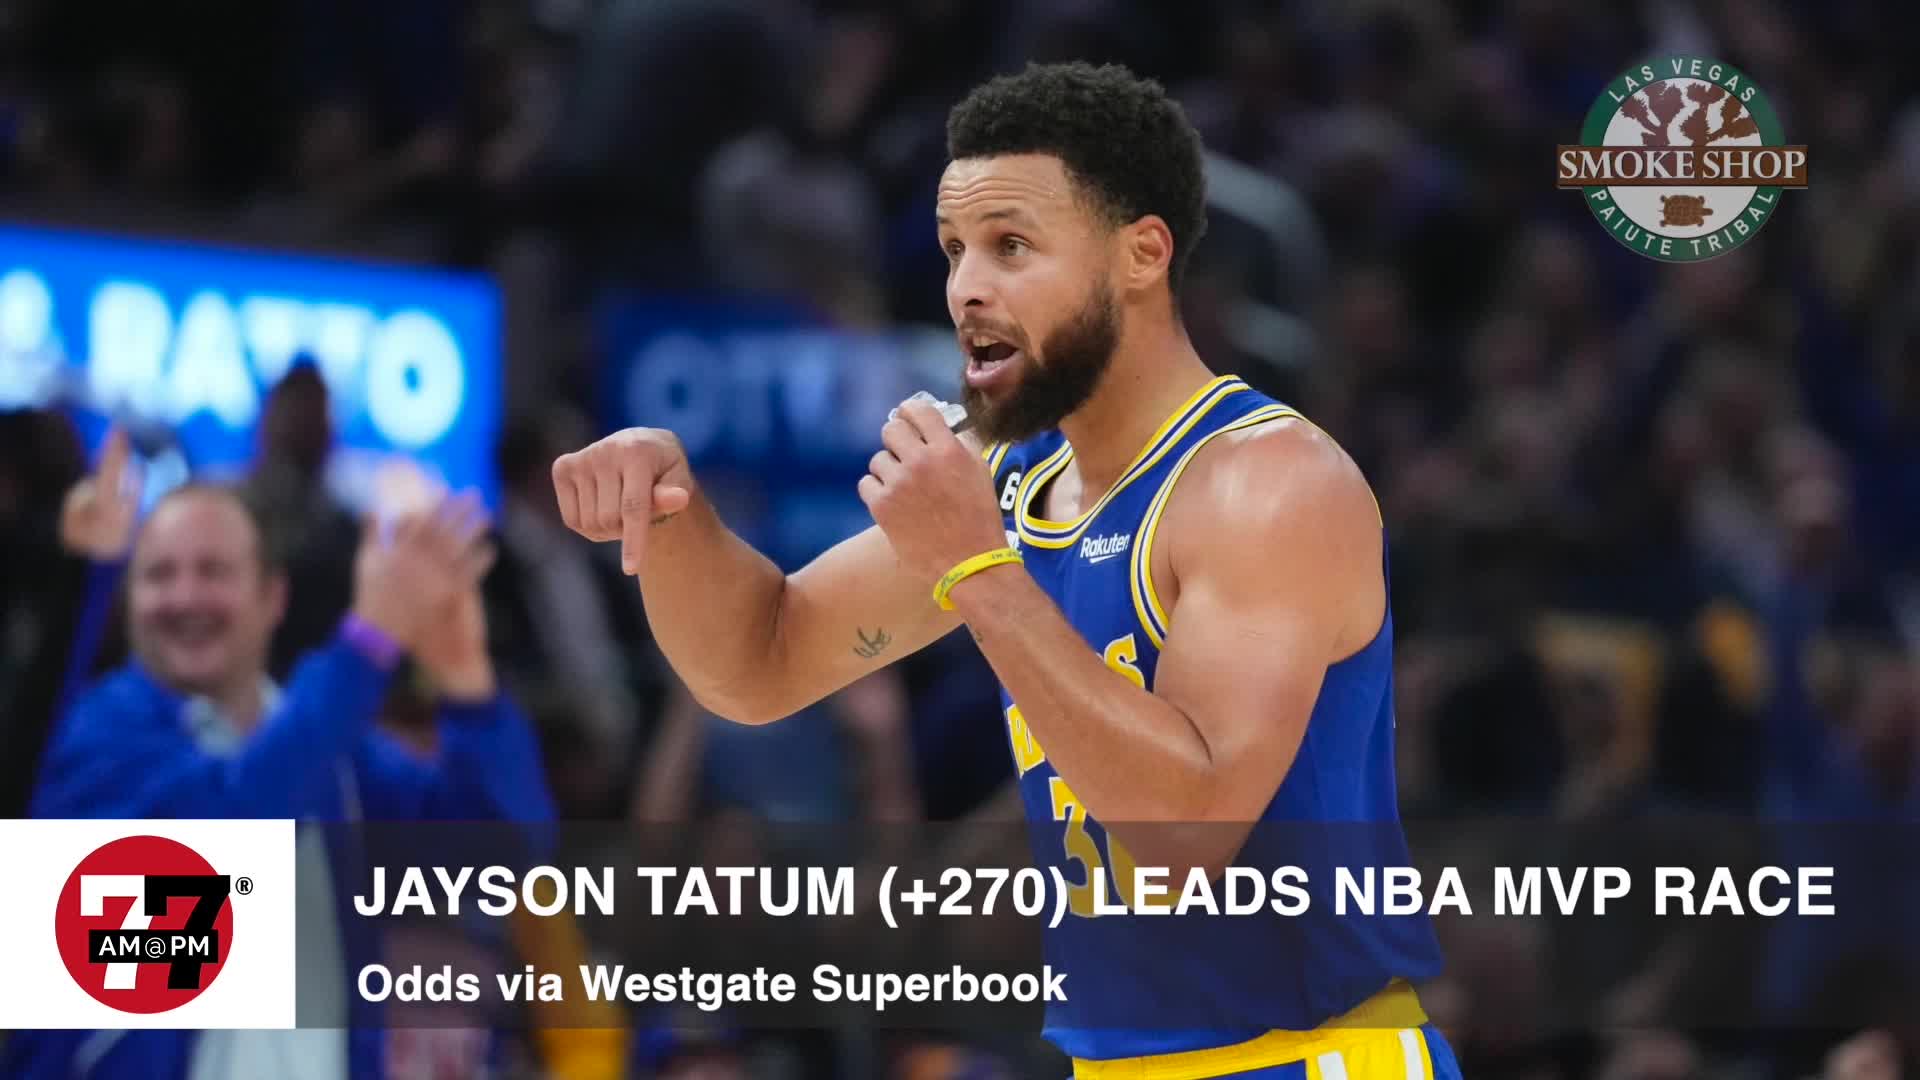 NBA MVP odds according to Westgate Superbook